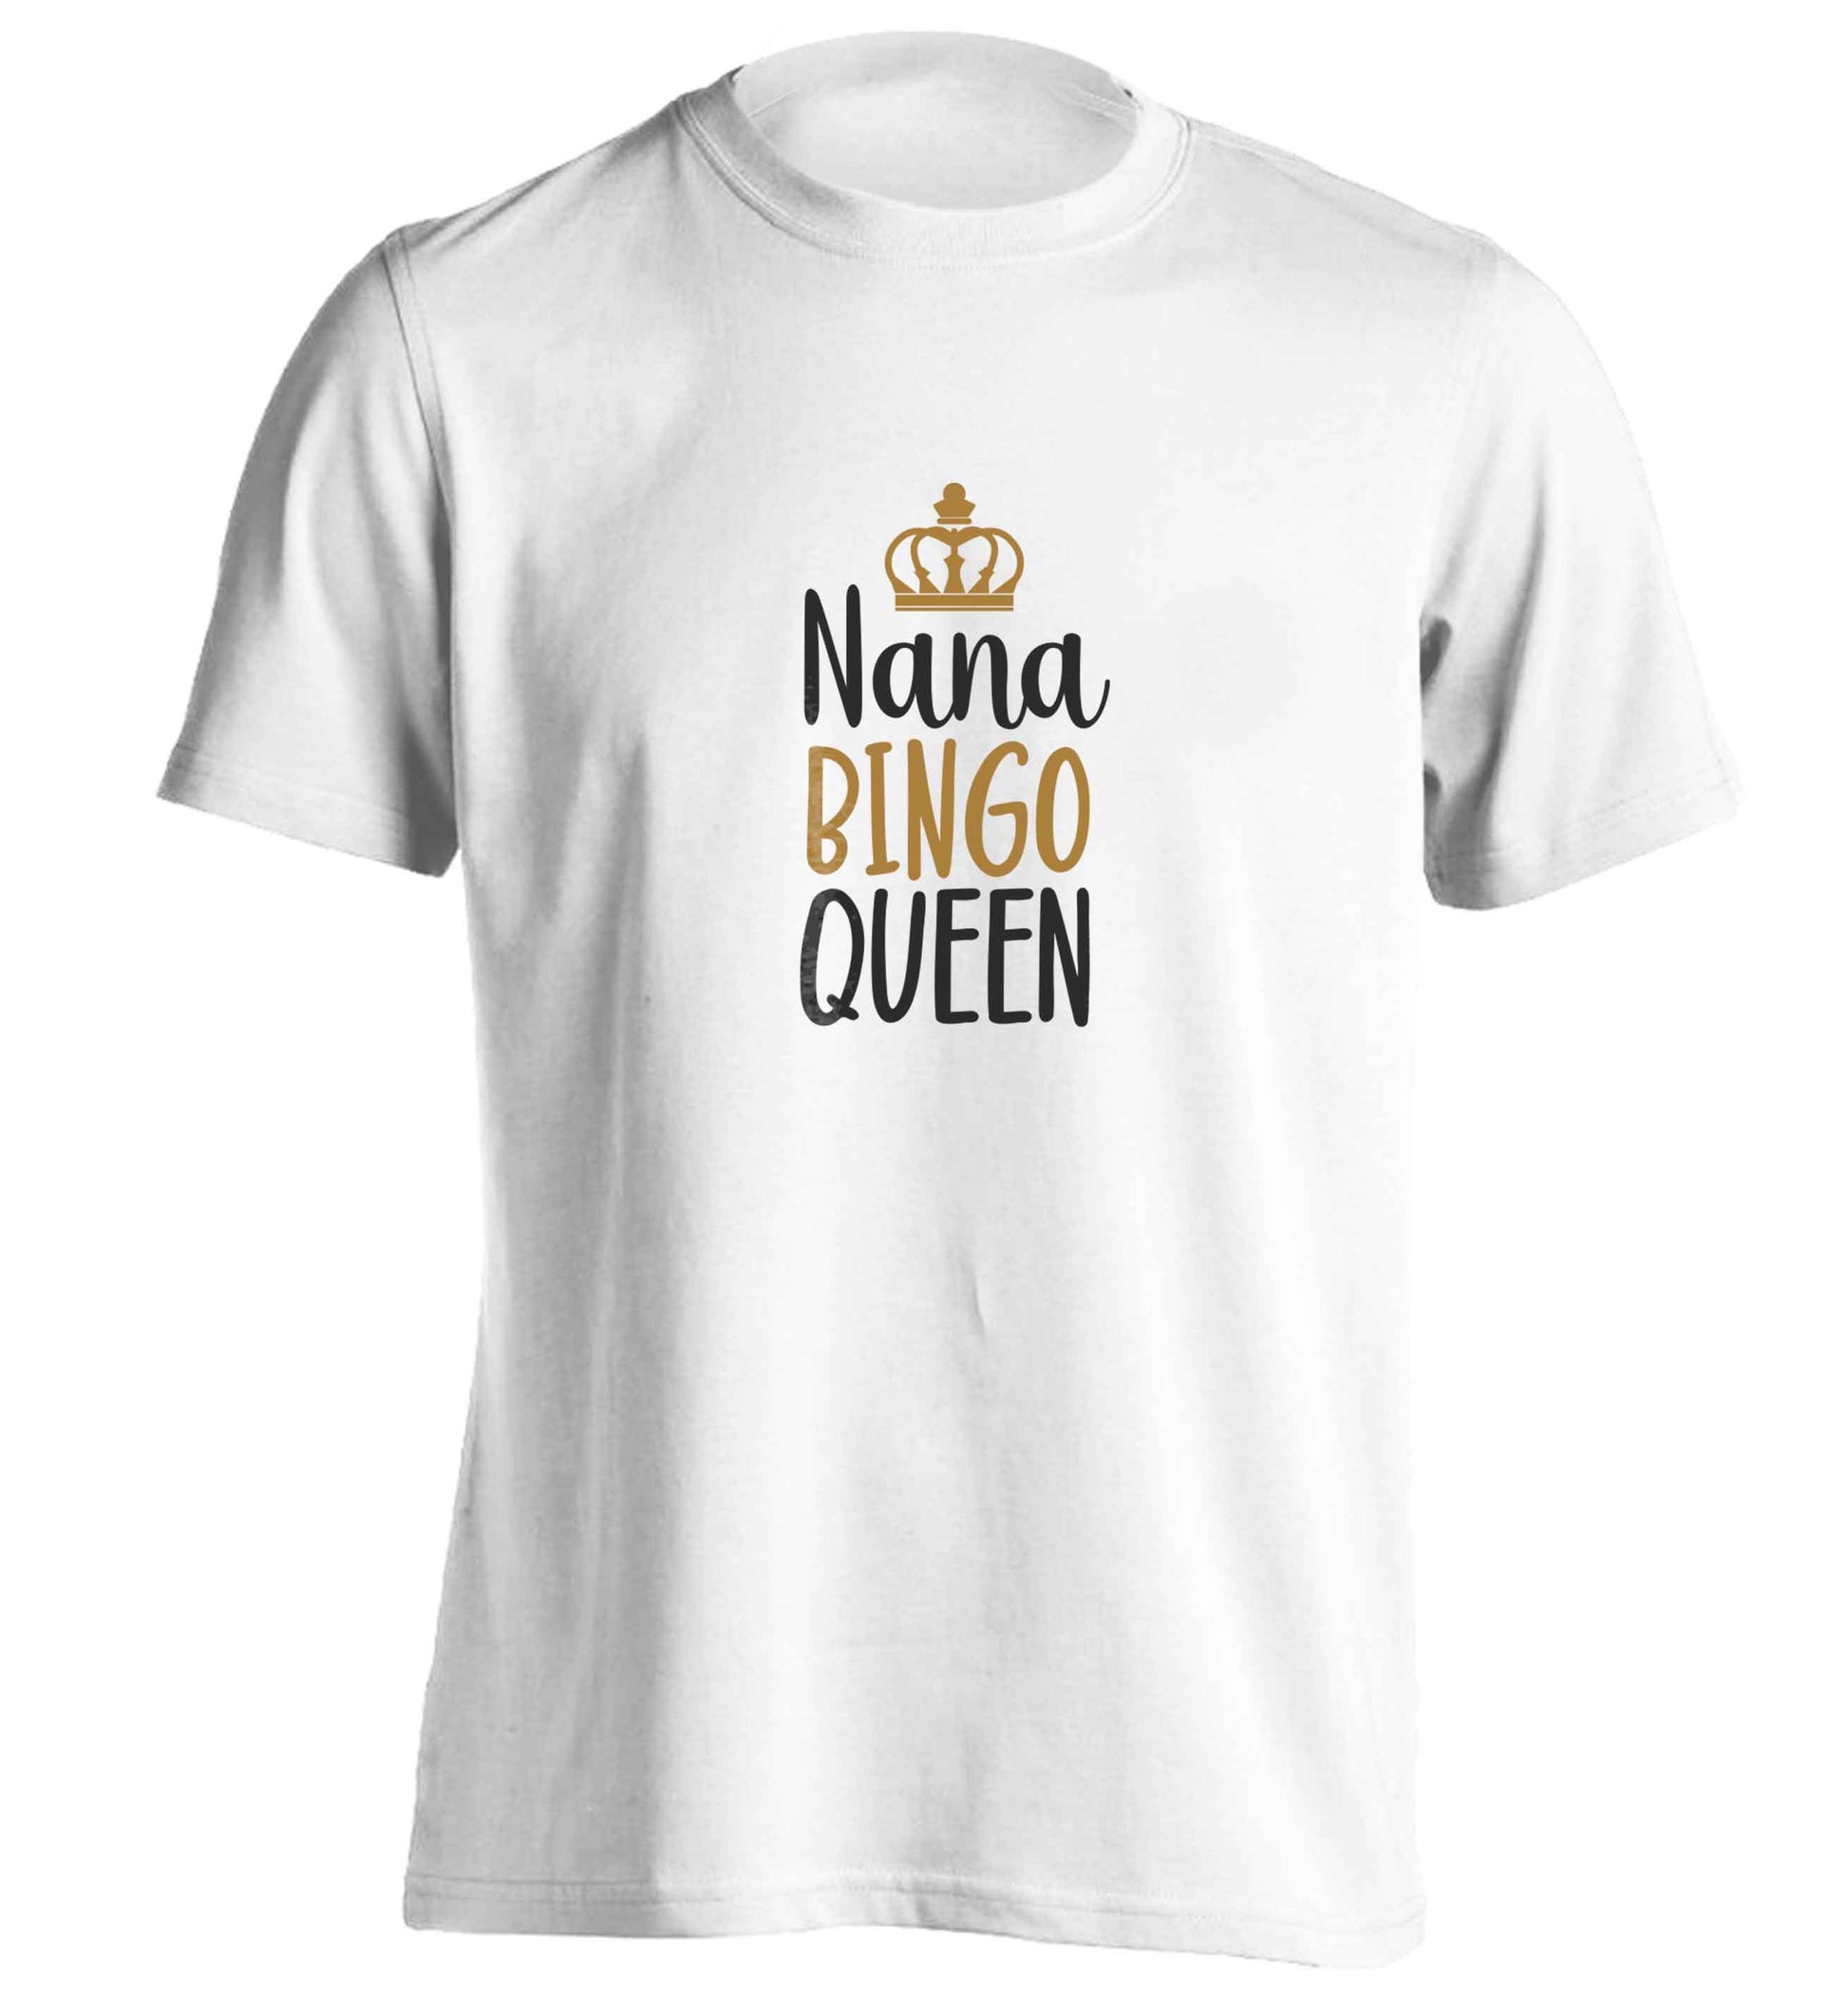 Personalised bingo queen adults unisex white Tshirt 2XL